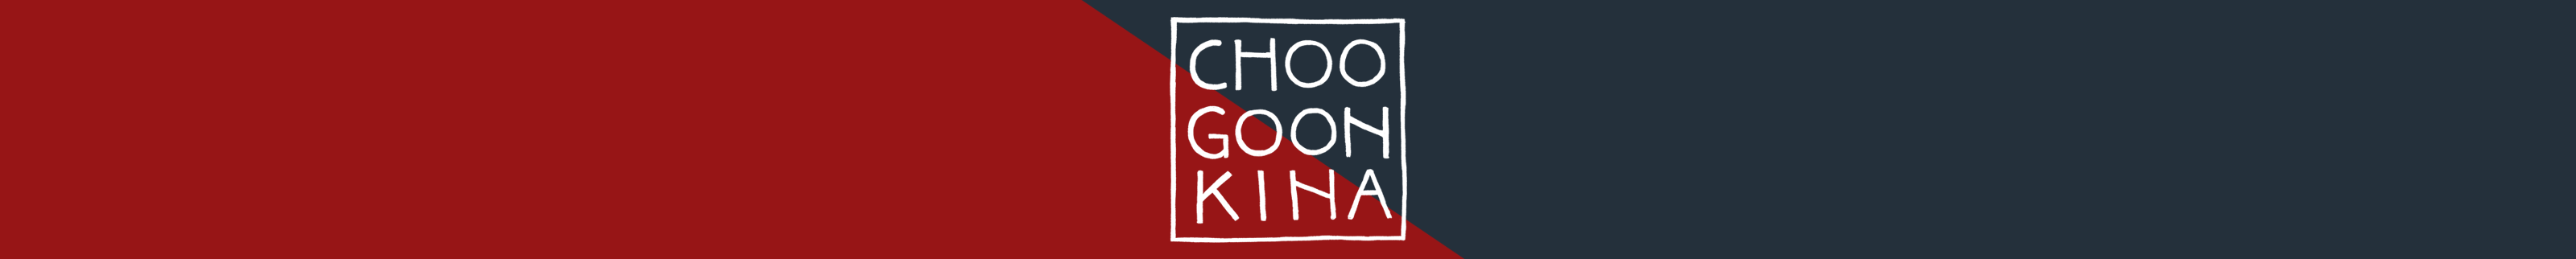 Banner de perfil de Kato Choogoonkina